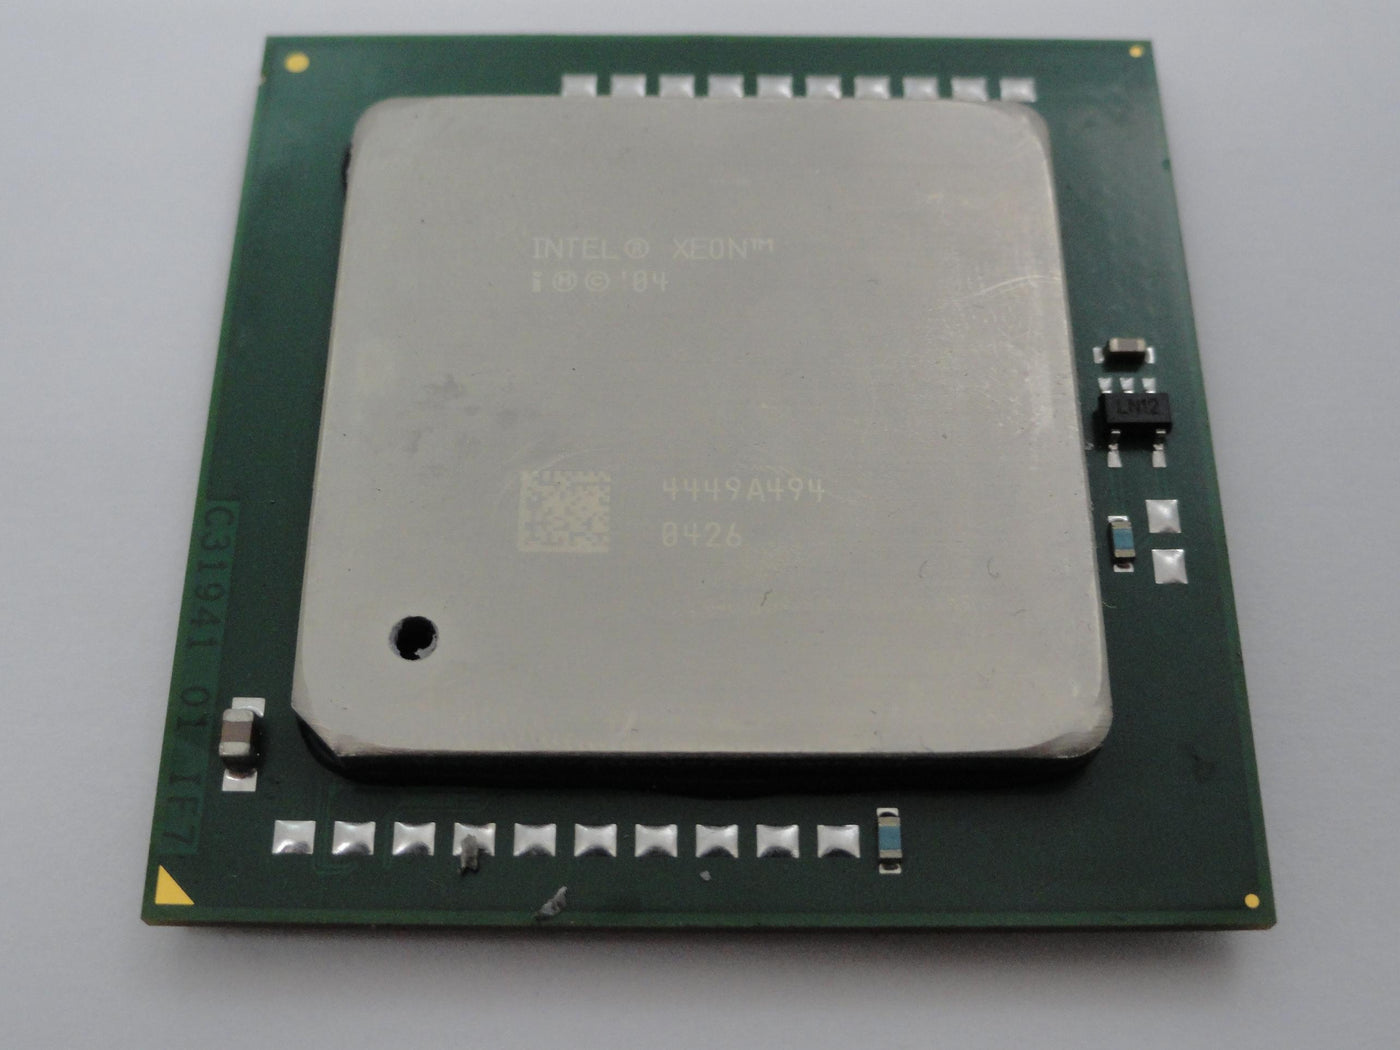 SL7PG - Intel Xeon 3.4GHz 800MHz FSB 1Mb L2 Cache CPU - Refurbished